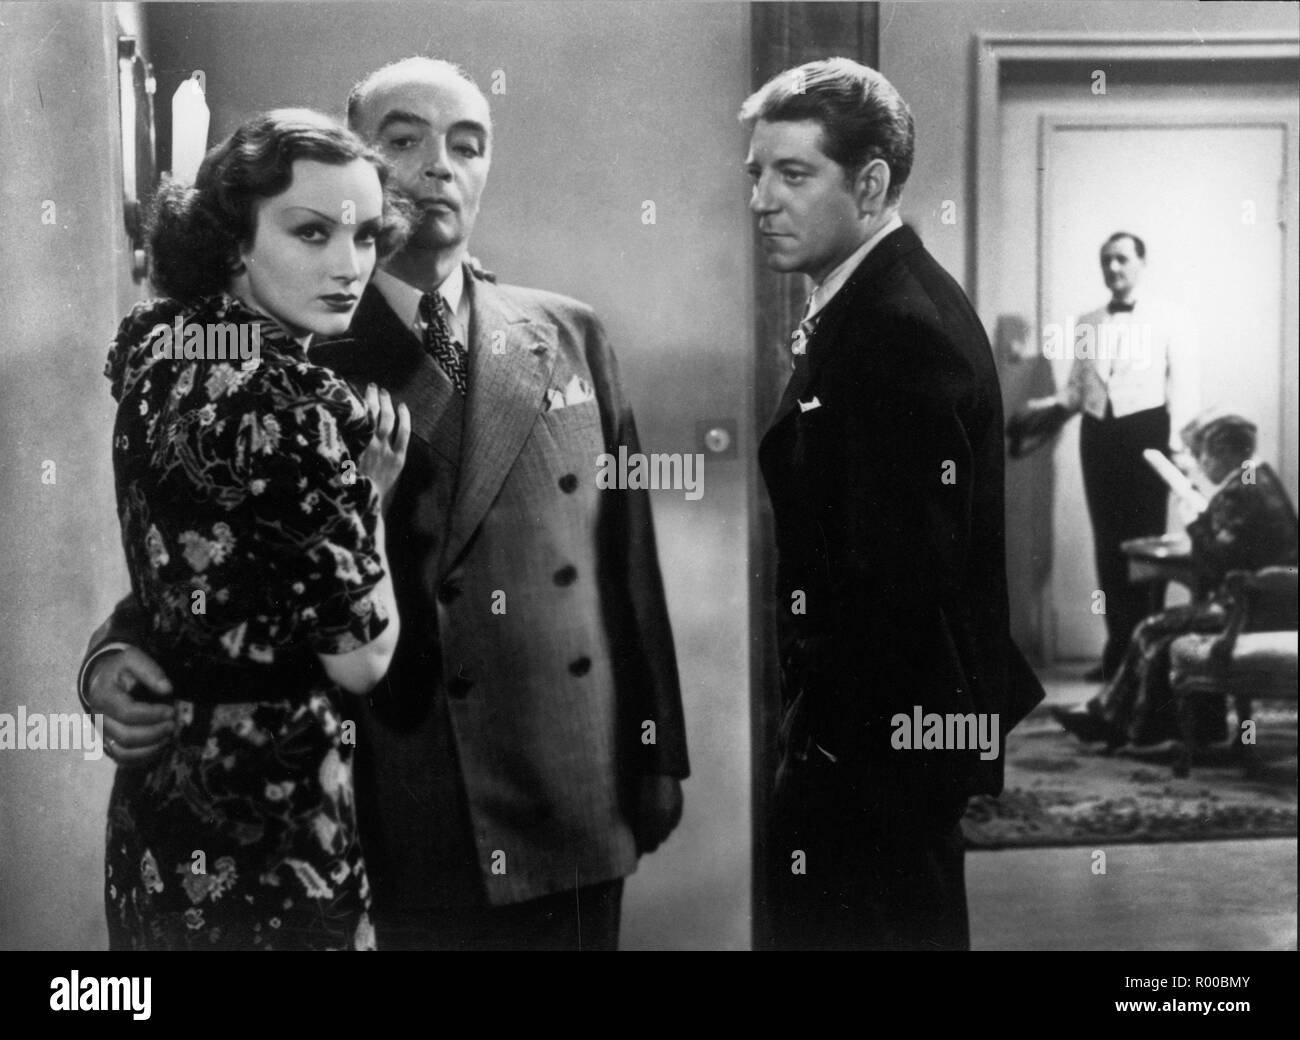 Gueule d'amour Year: 1937 - France Jean Gabin, Mireille Balin Director: Jean  Gremillon Stock Photo - Alamy